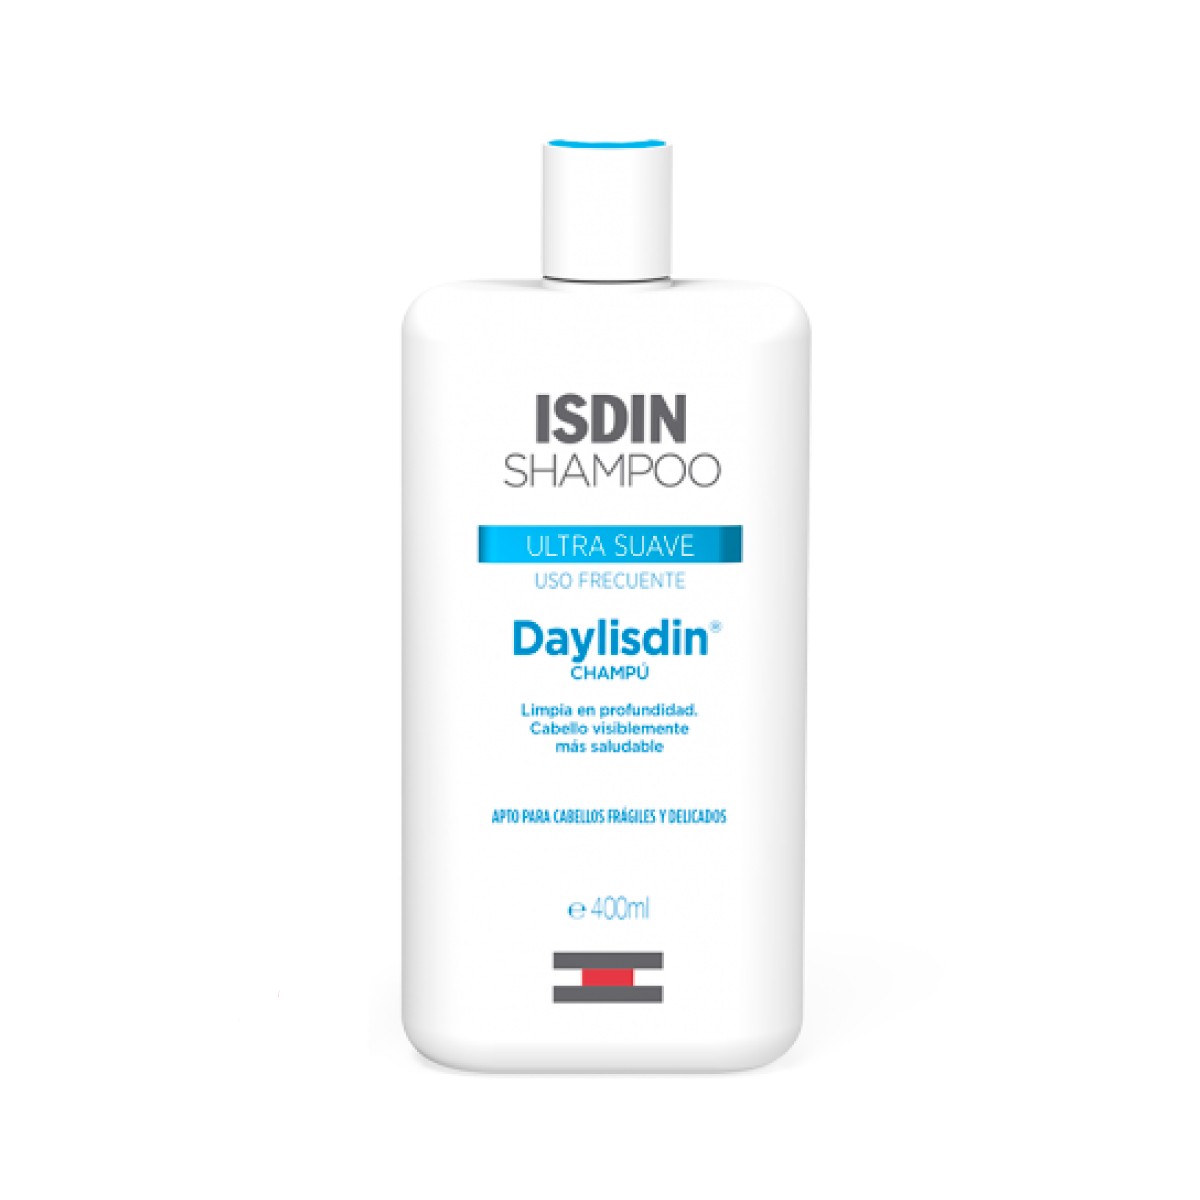 Daylisdin Shampoo de Uso Frequente, 400 ml